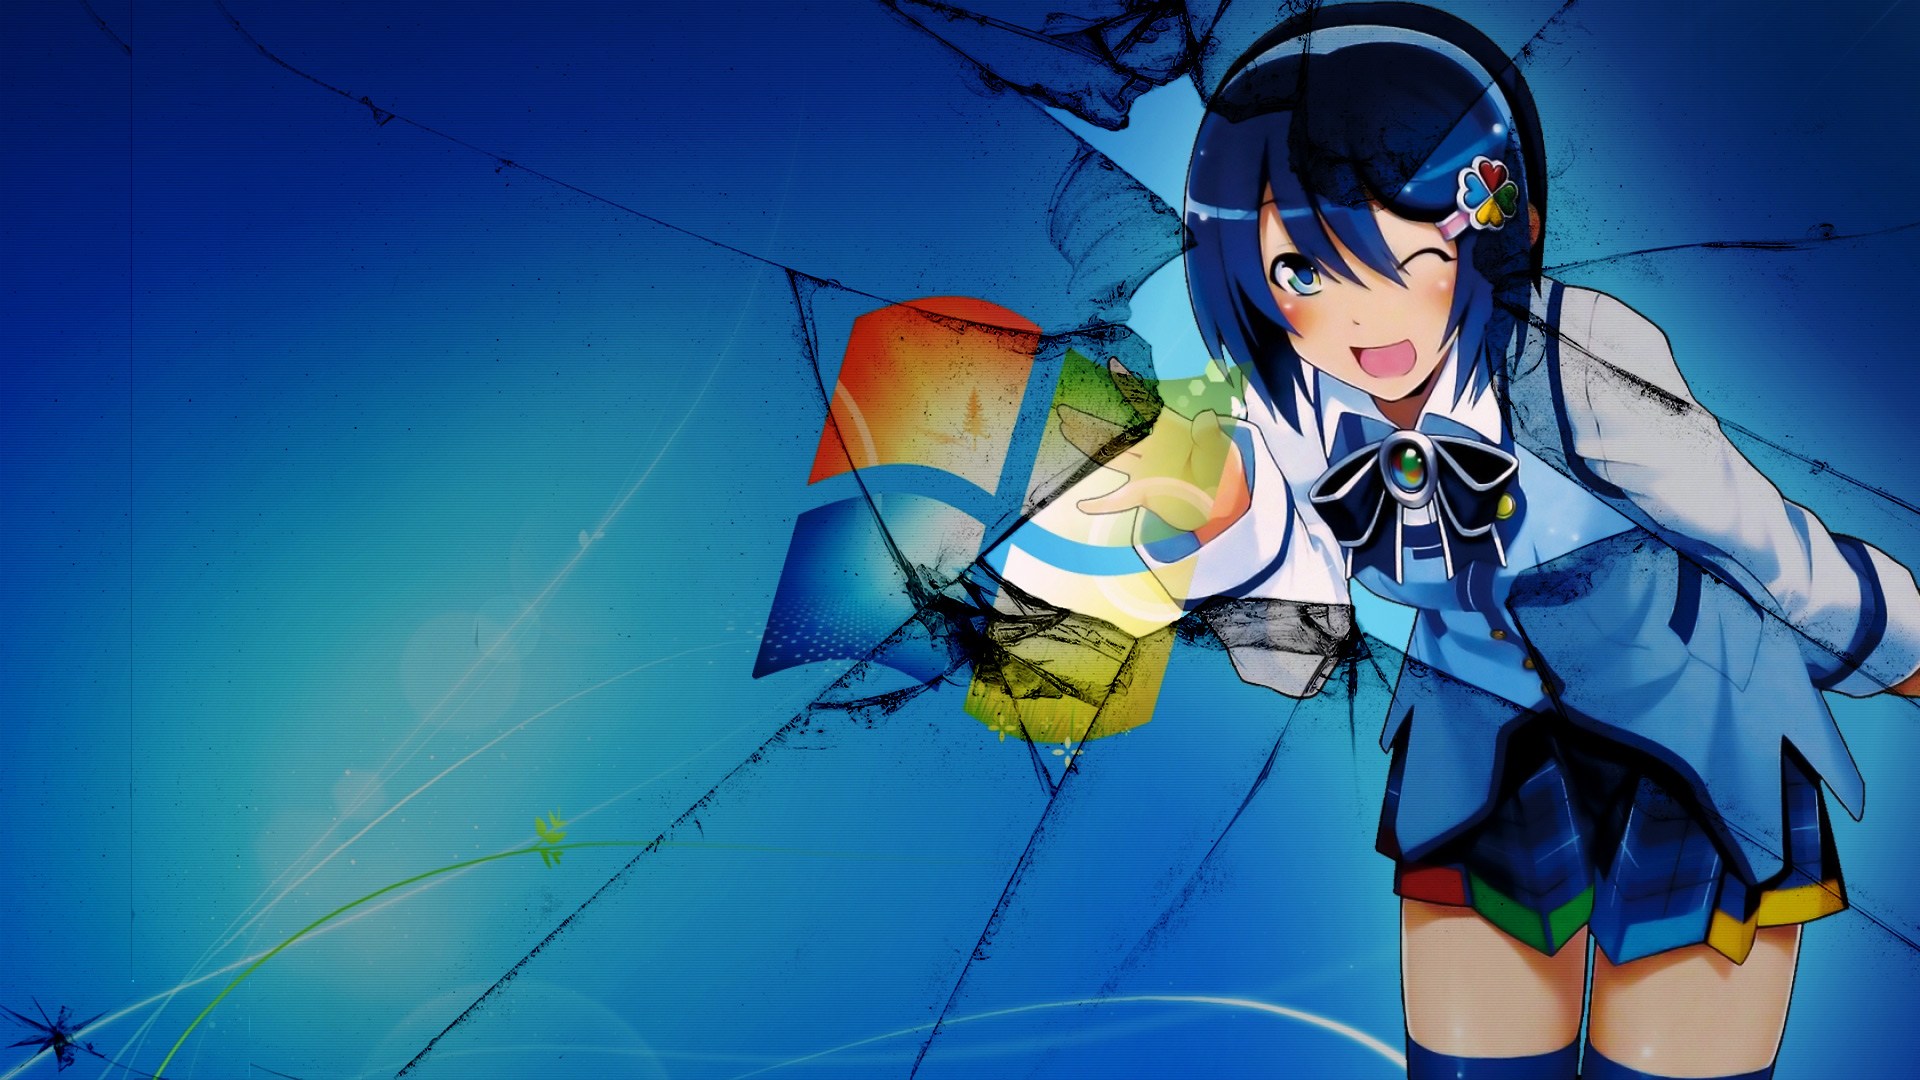 Erased Anime Wallpaper Wallpapersafari - Anime Windows Wallpaper Hd , HD Wallpaper & Backgrounds